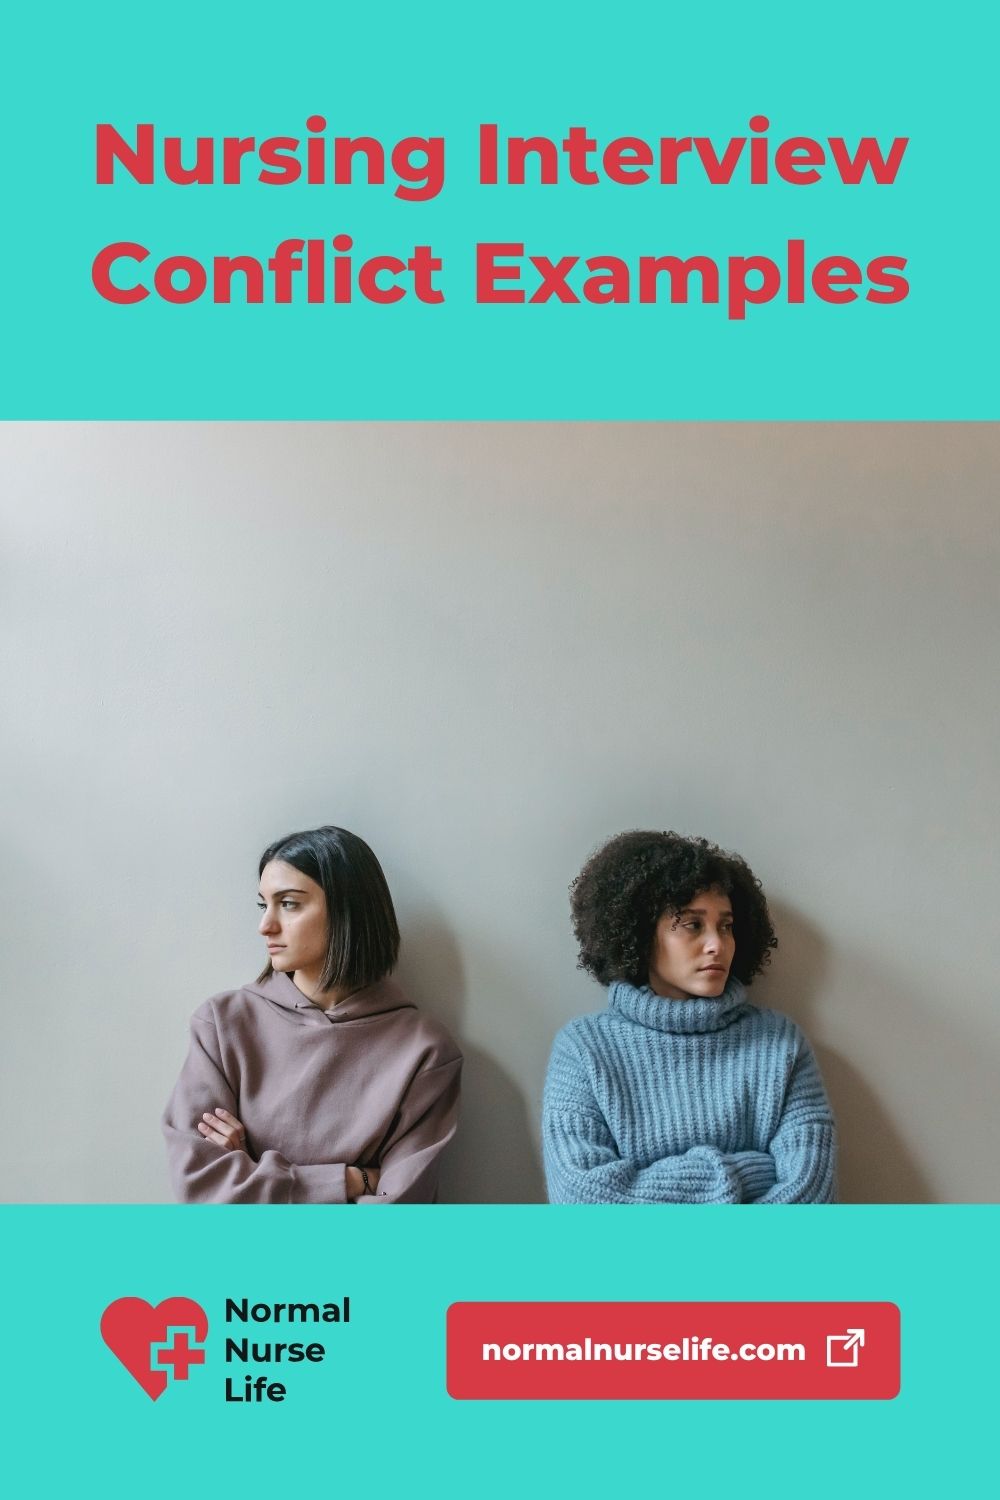 Nursing interview conflict examples